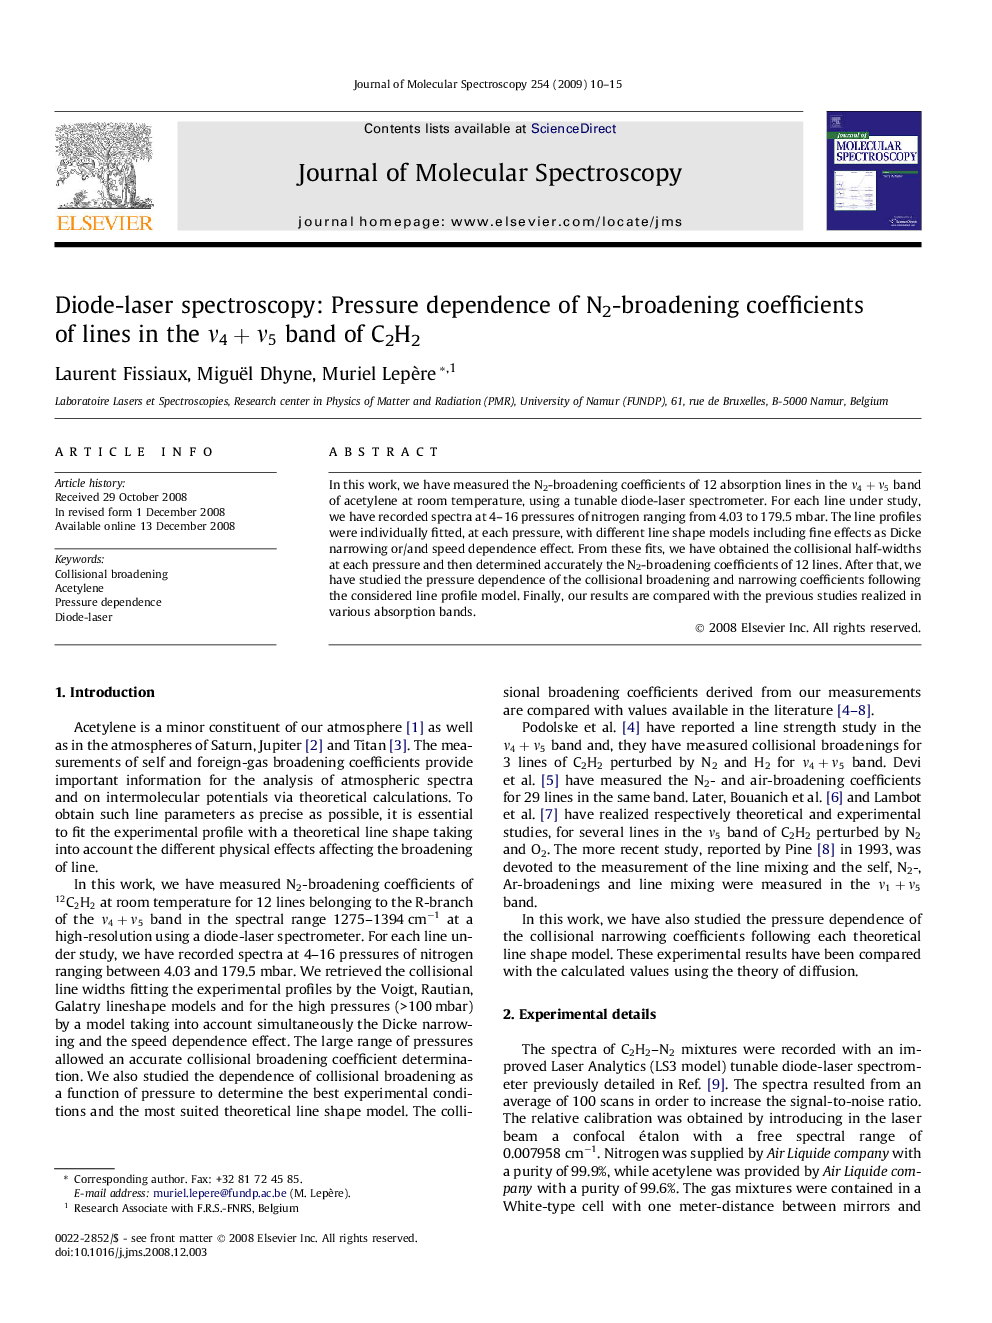 Diode-laser spectroscopy: Pressure dependence of N2-broadening coefficients of lines in the Î½4+Î½5 band of C2H2